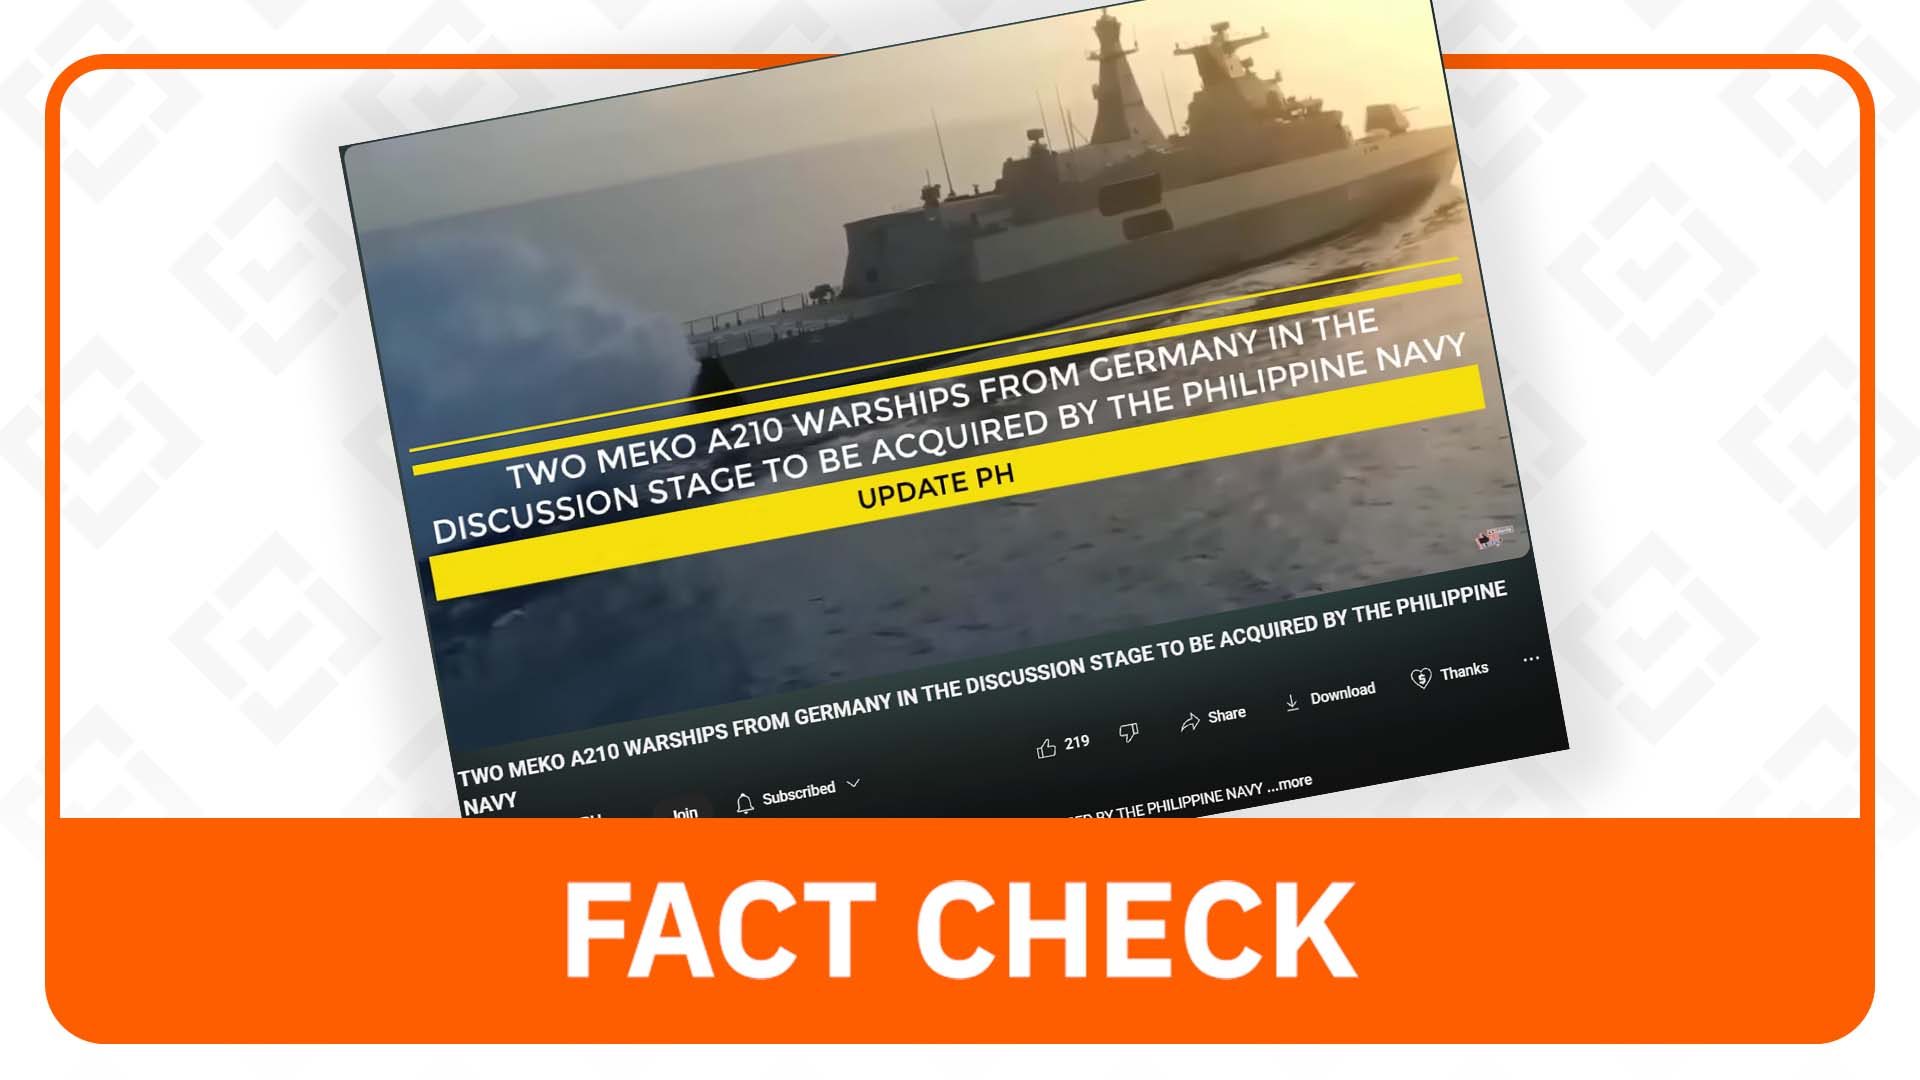 FACT CHECK: No reports of PH acquiring German-made frigates